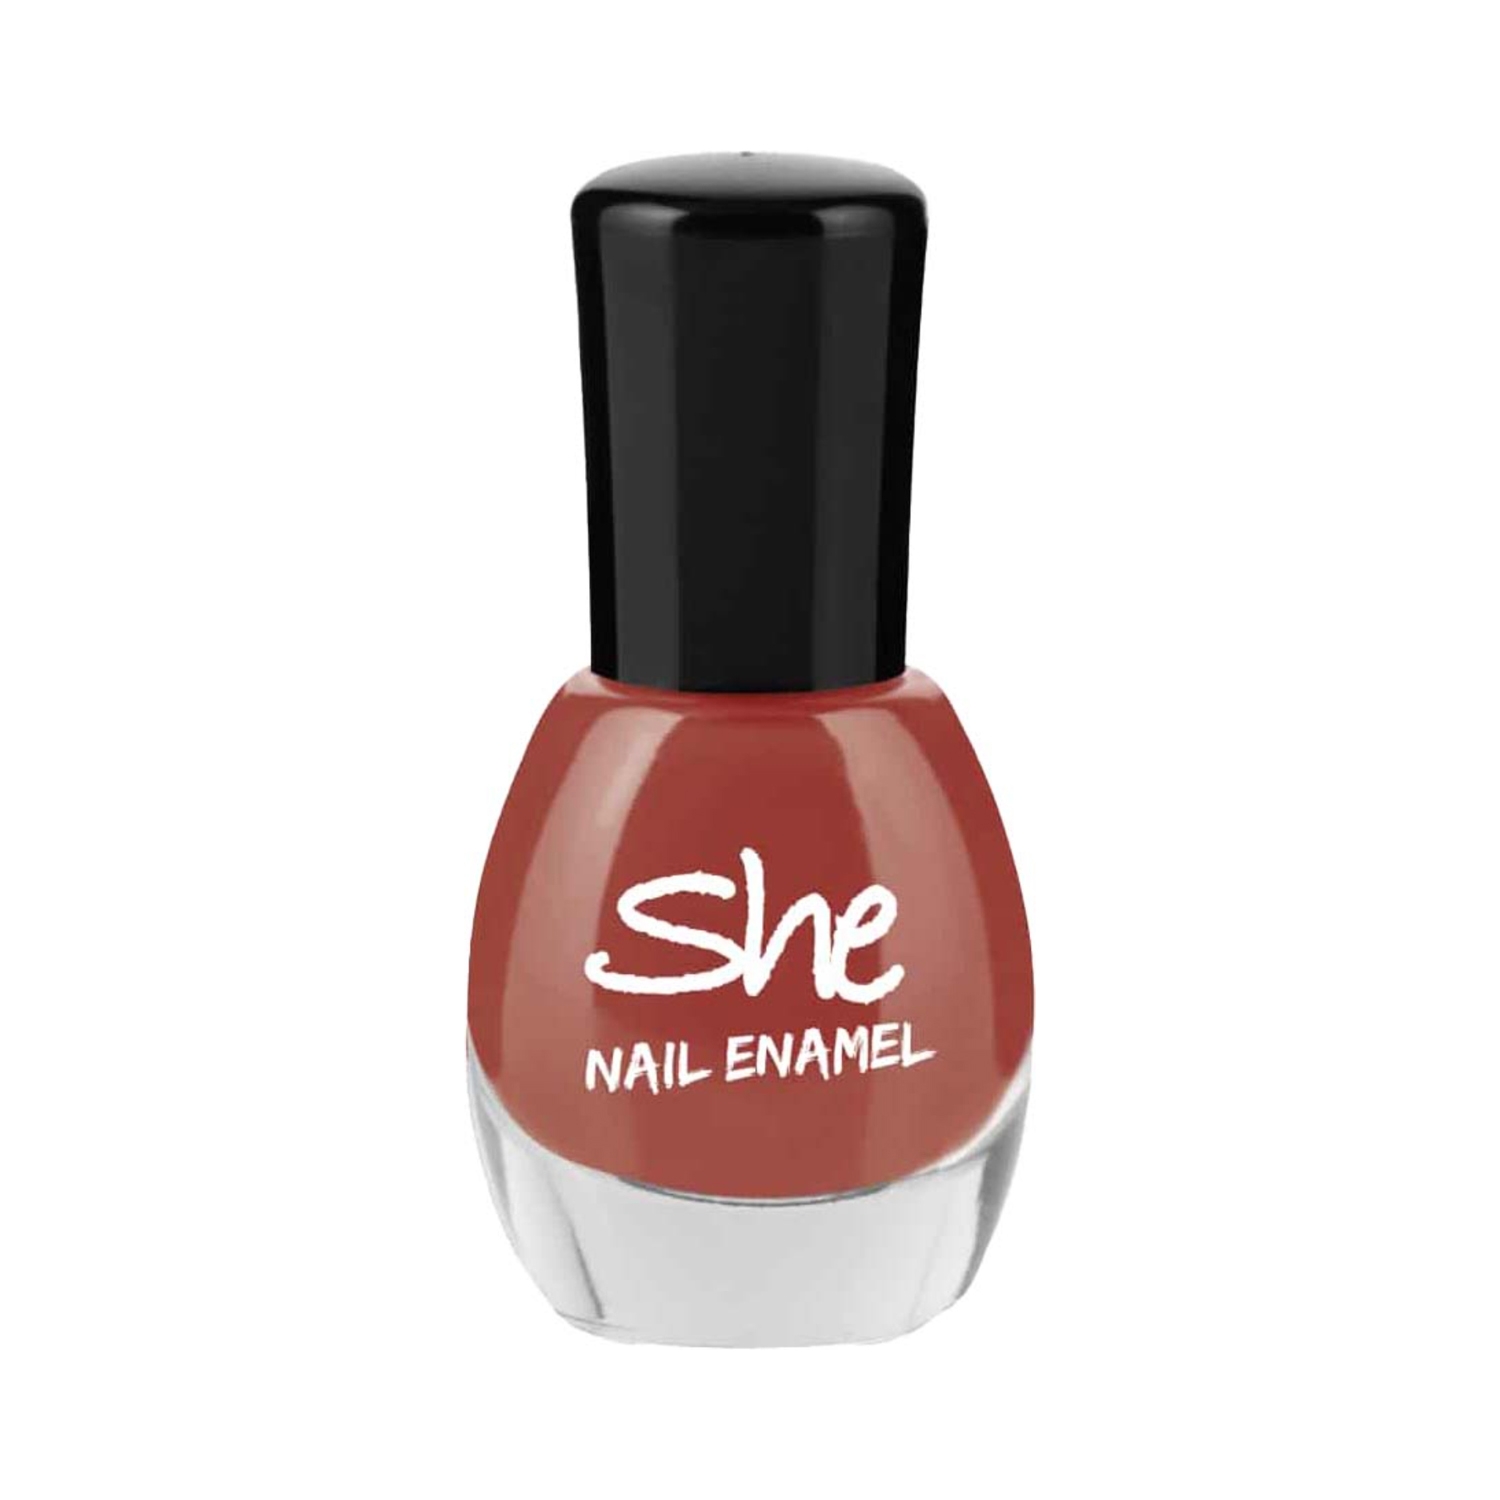 She | She Makeup Nail Enamel - 208 Berry Red (8ml)